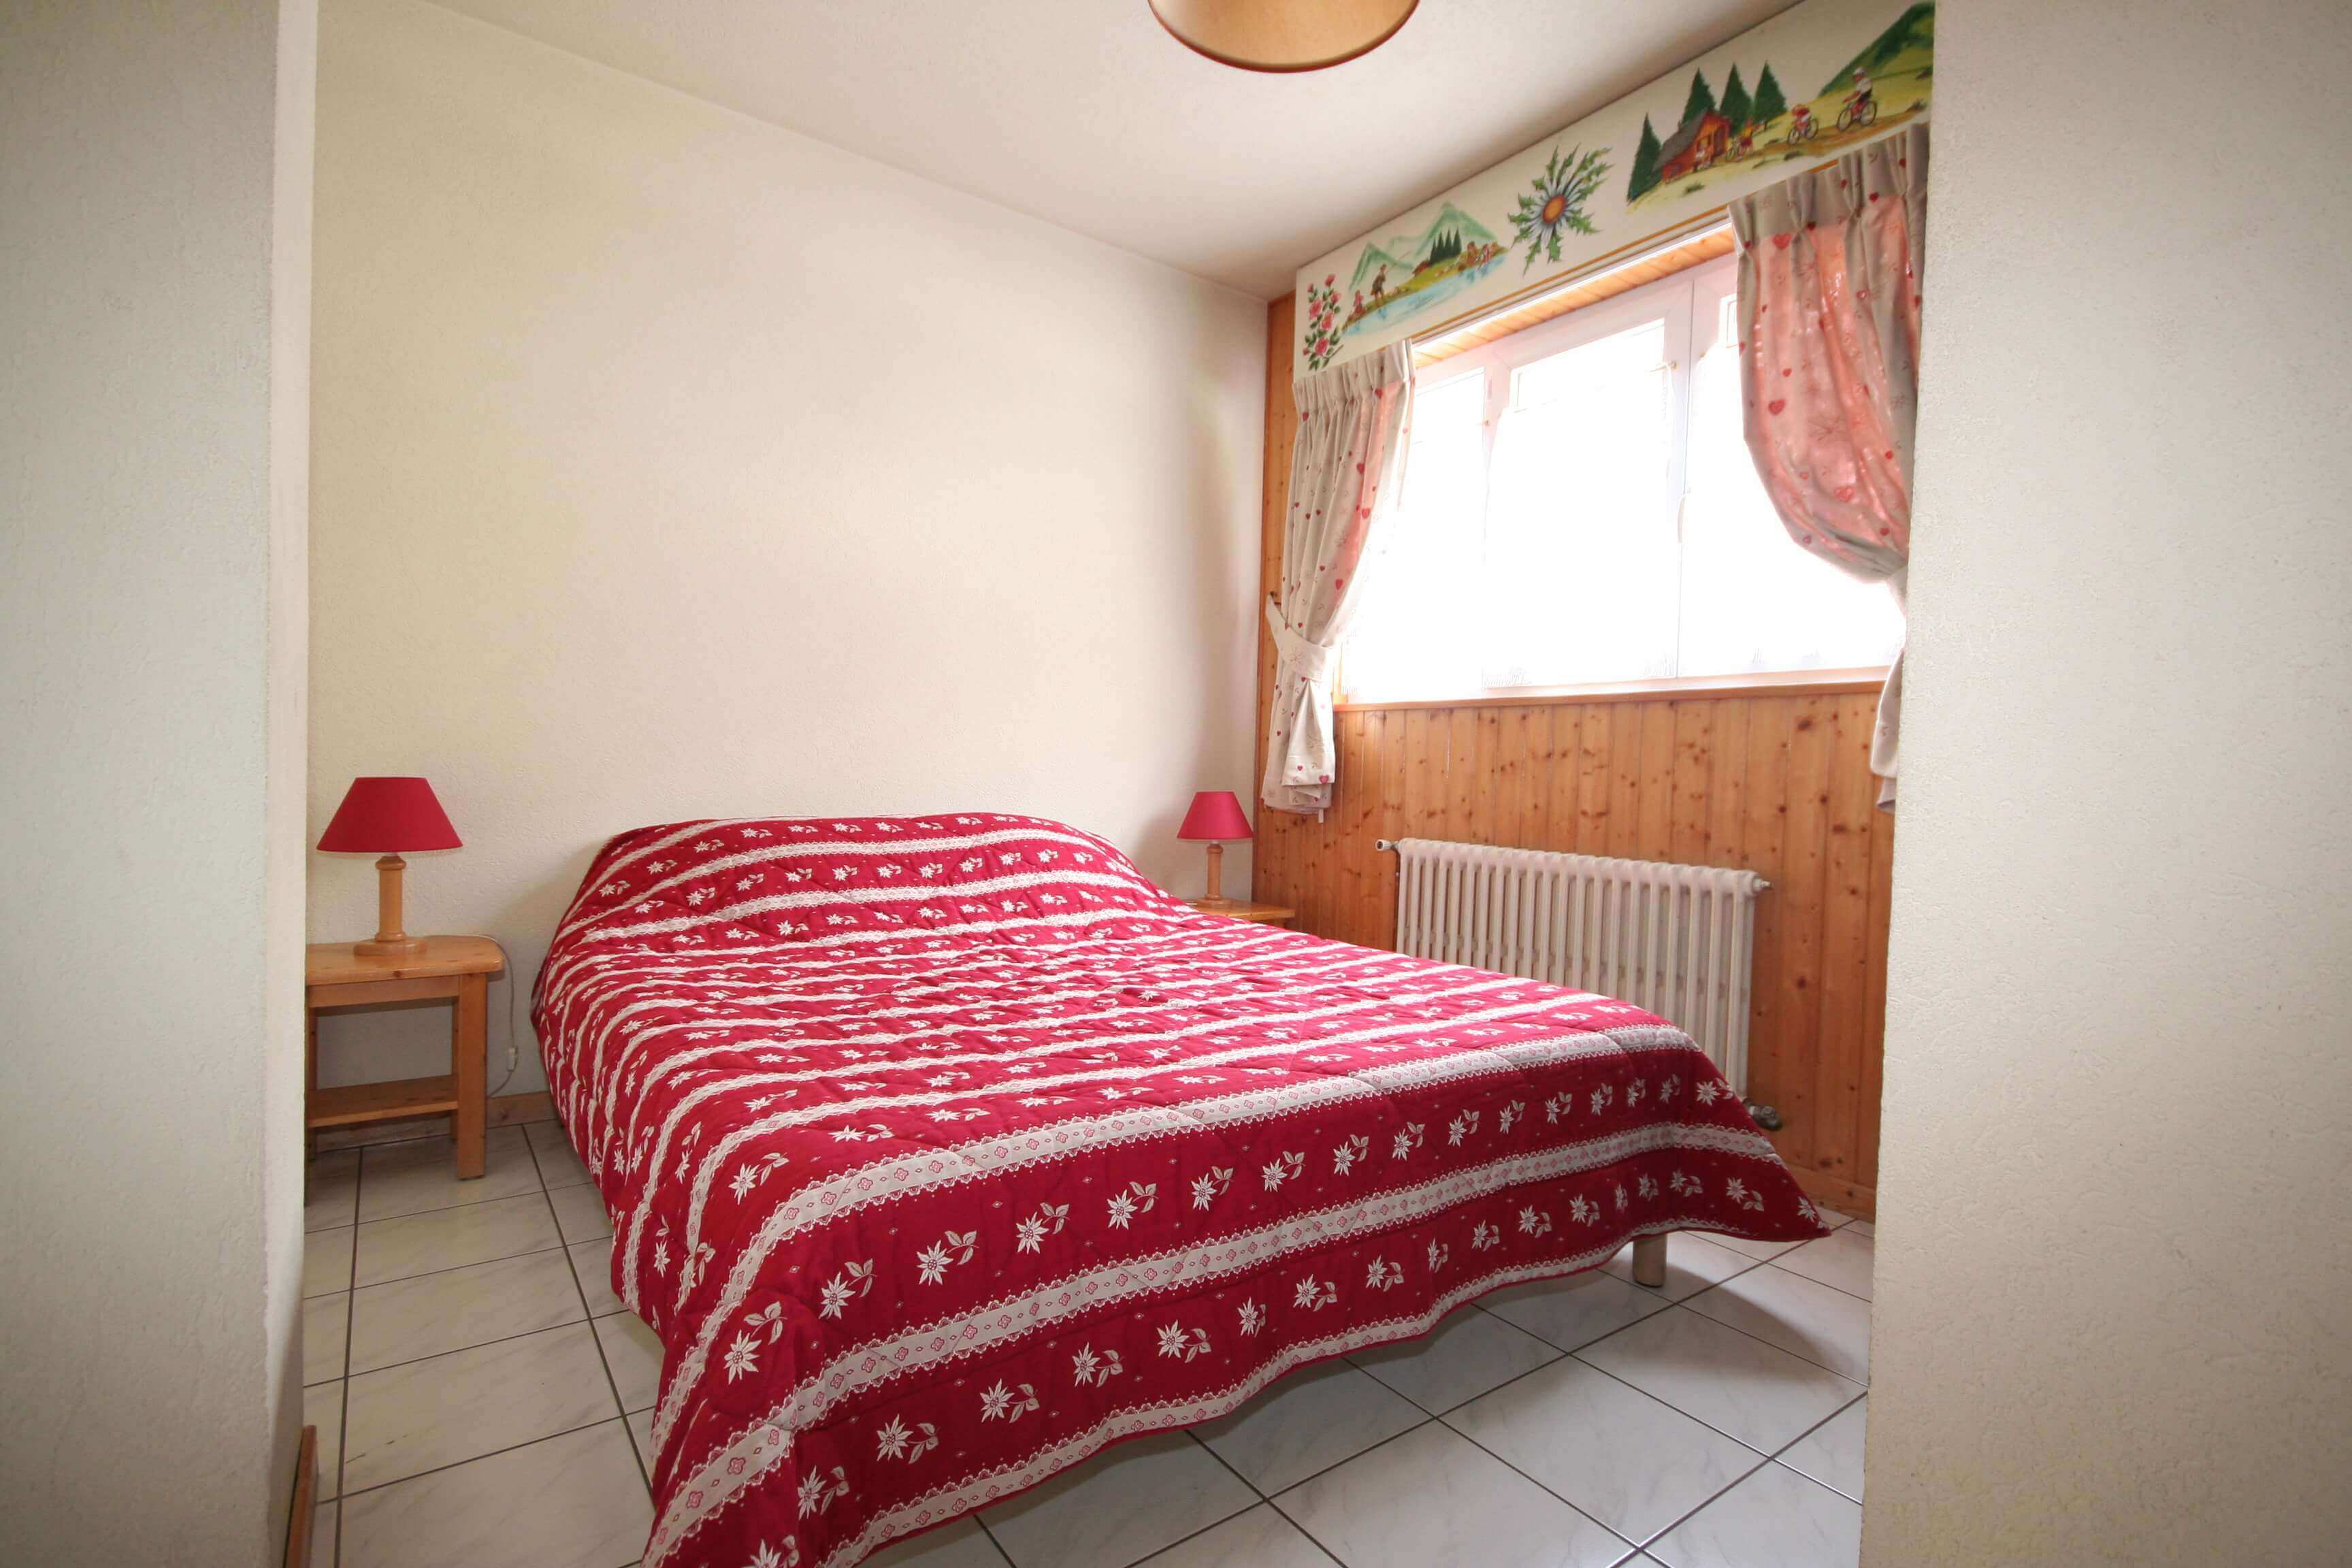 Bed 5 Rooms with terrace Echo des Montagnes - Rent flats chatel